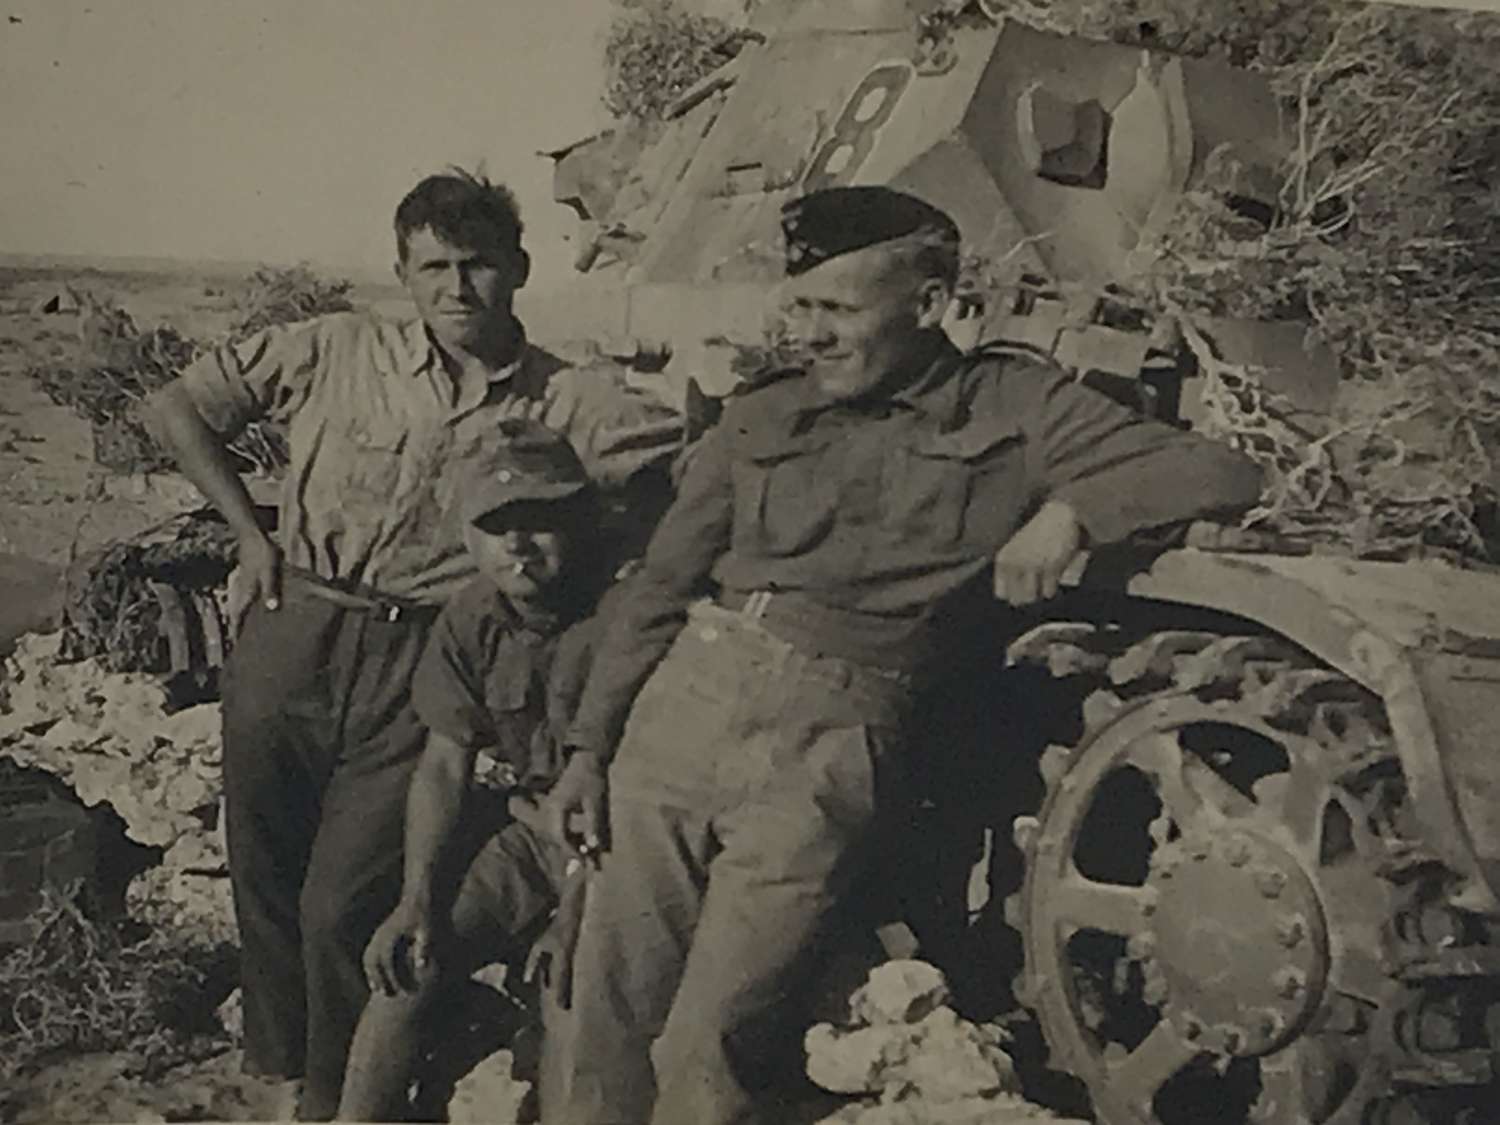 Panzer MK 3/4 crew photograph